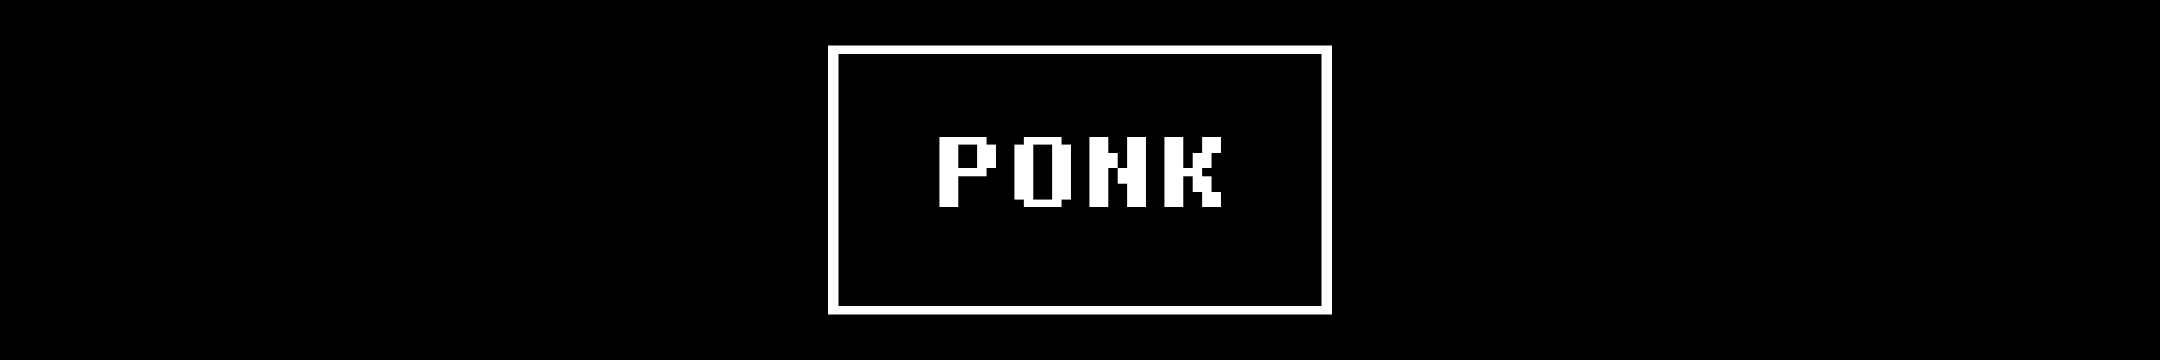 Ponk